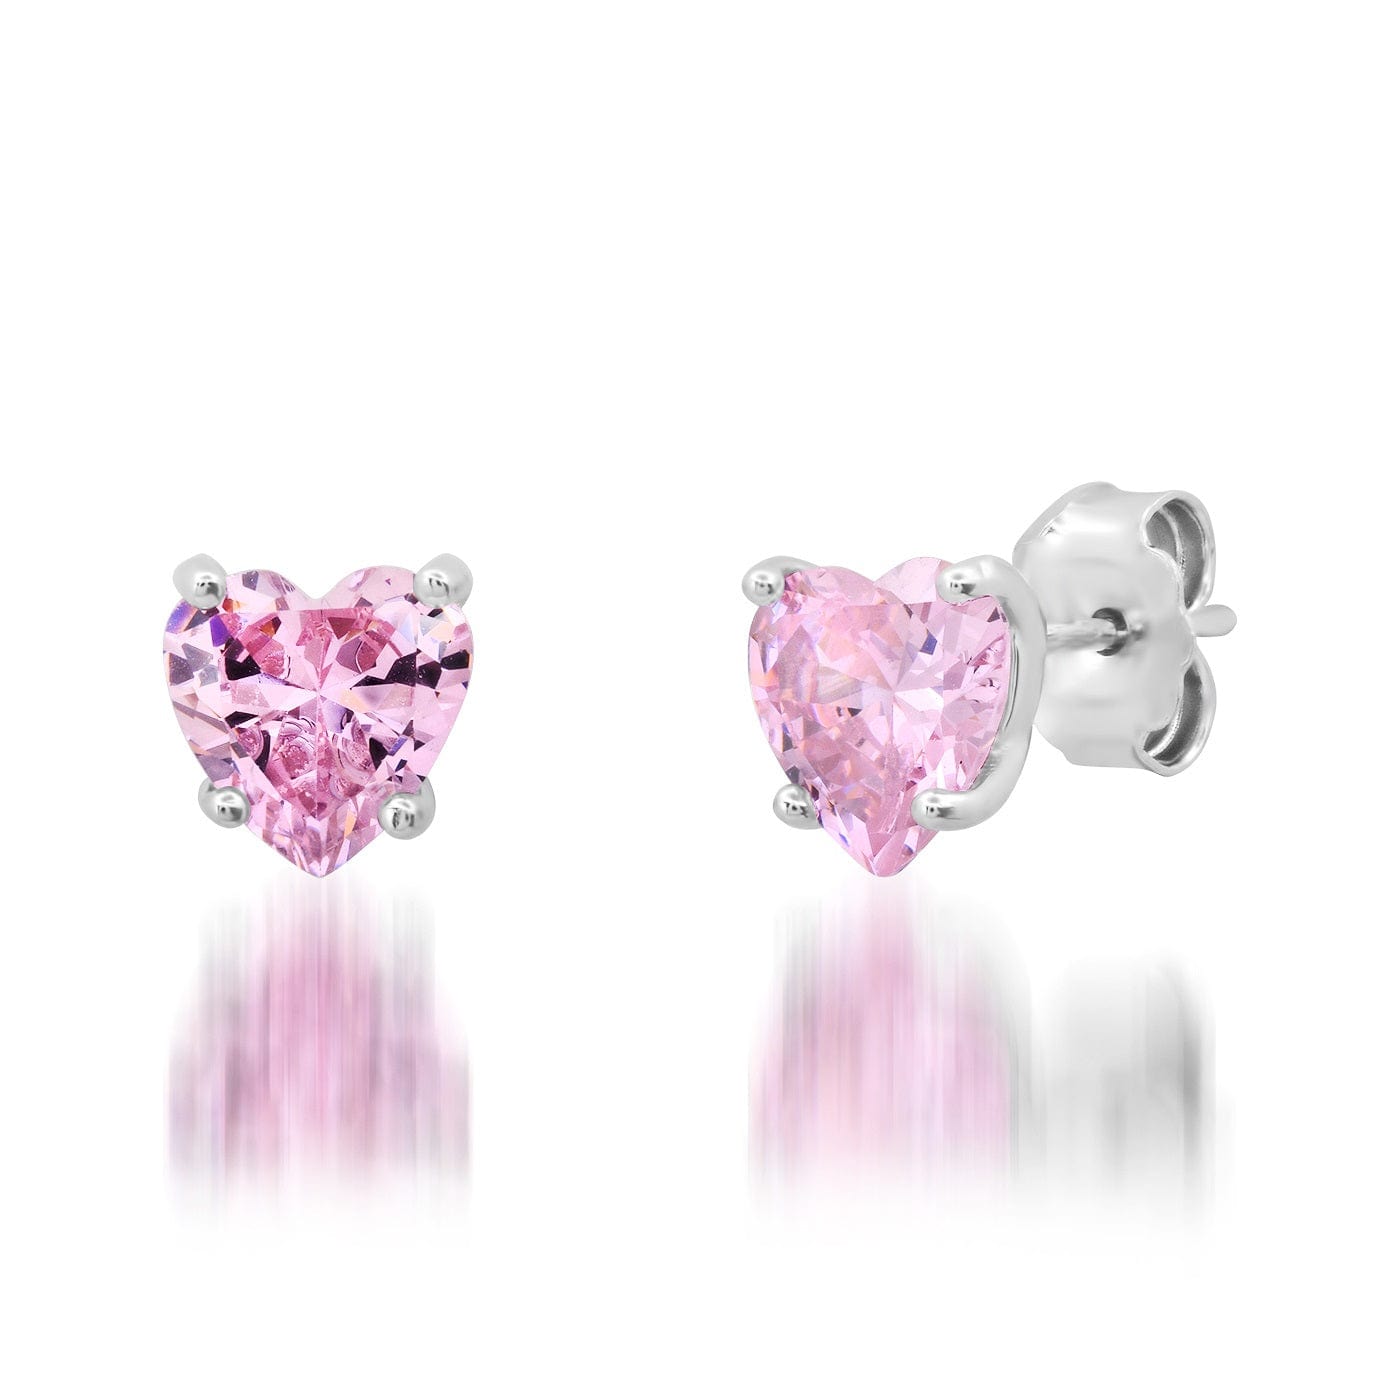 TAI JEWELRY Earrings Pink Glass Heart Studs